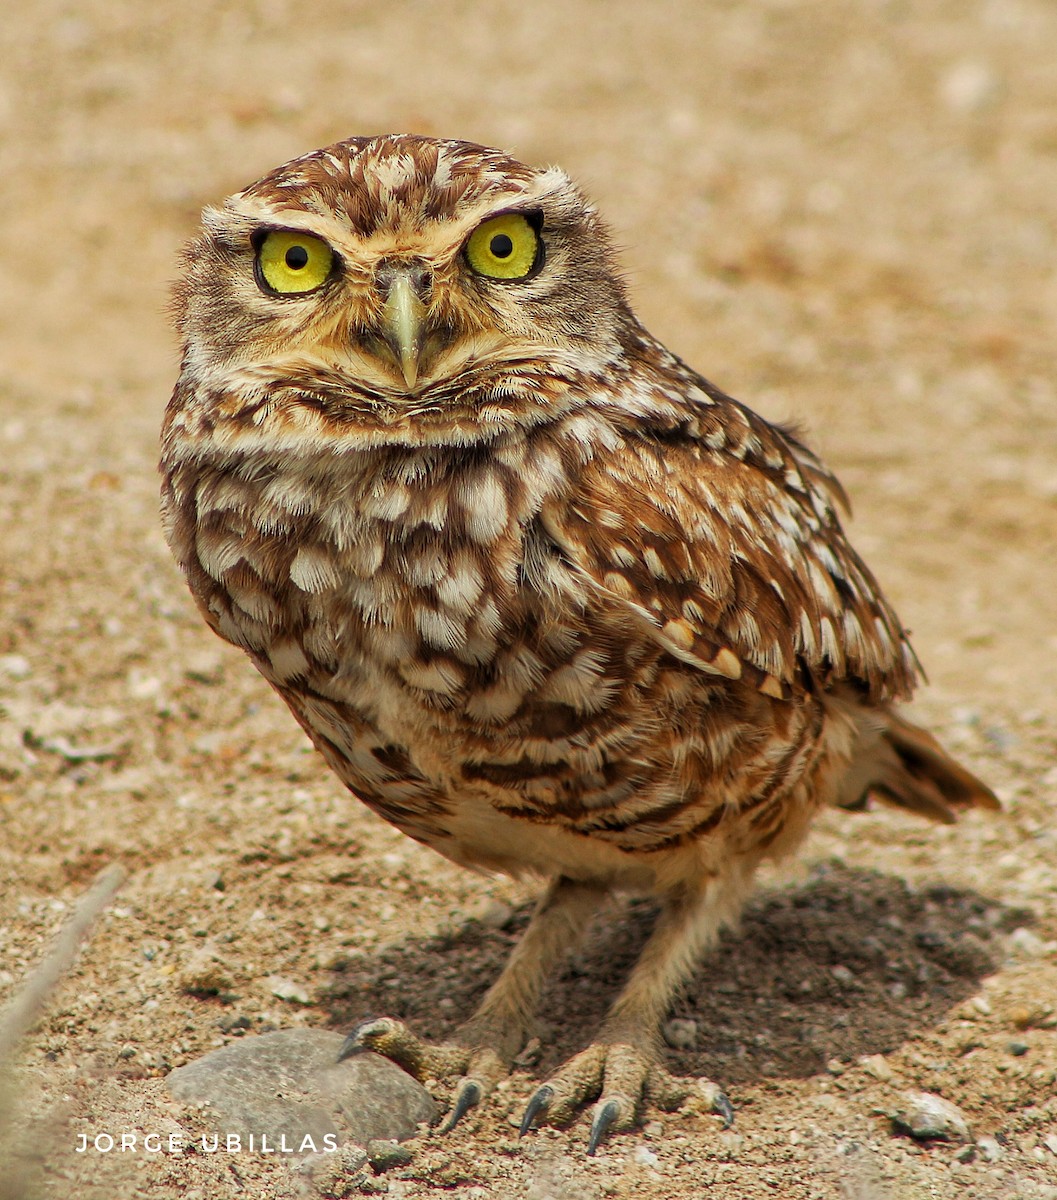 Burrowing Owl - Jorge luis Ubillas herera